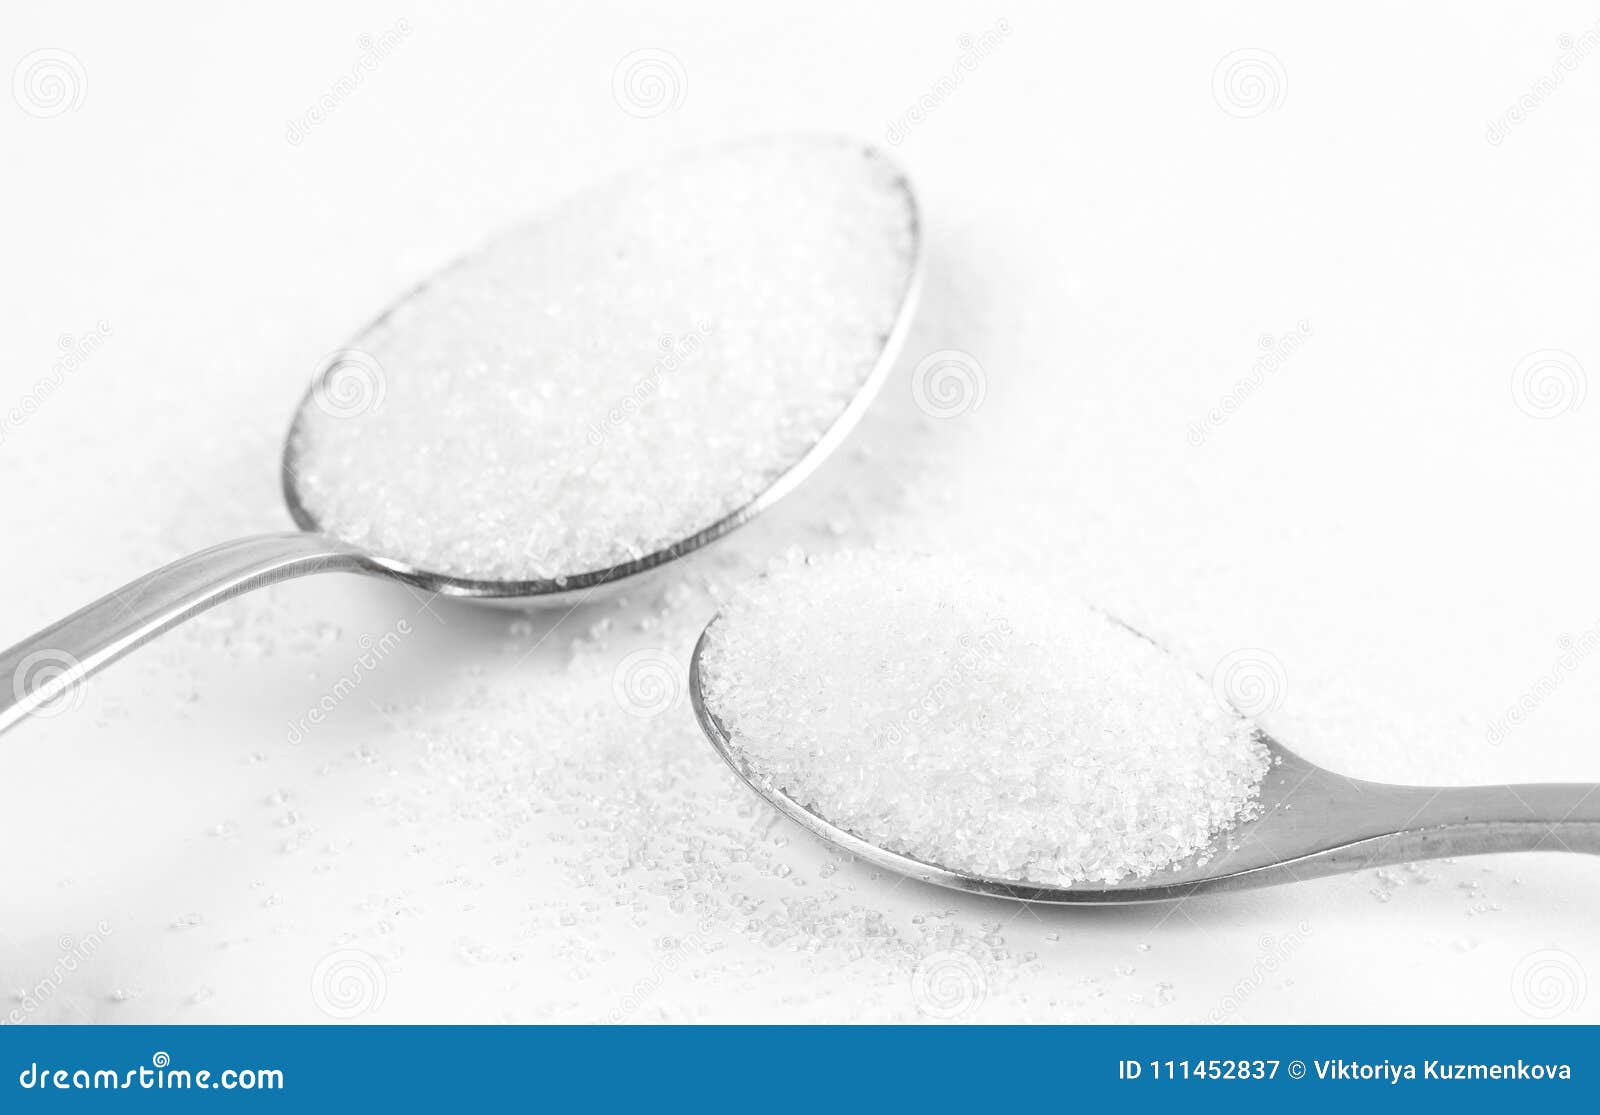 Ложки сахар 2 3 столовые